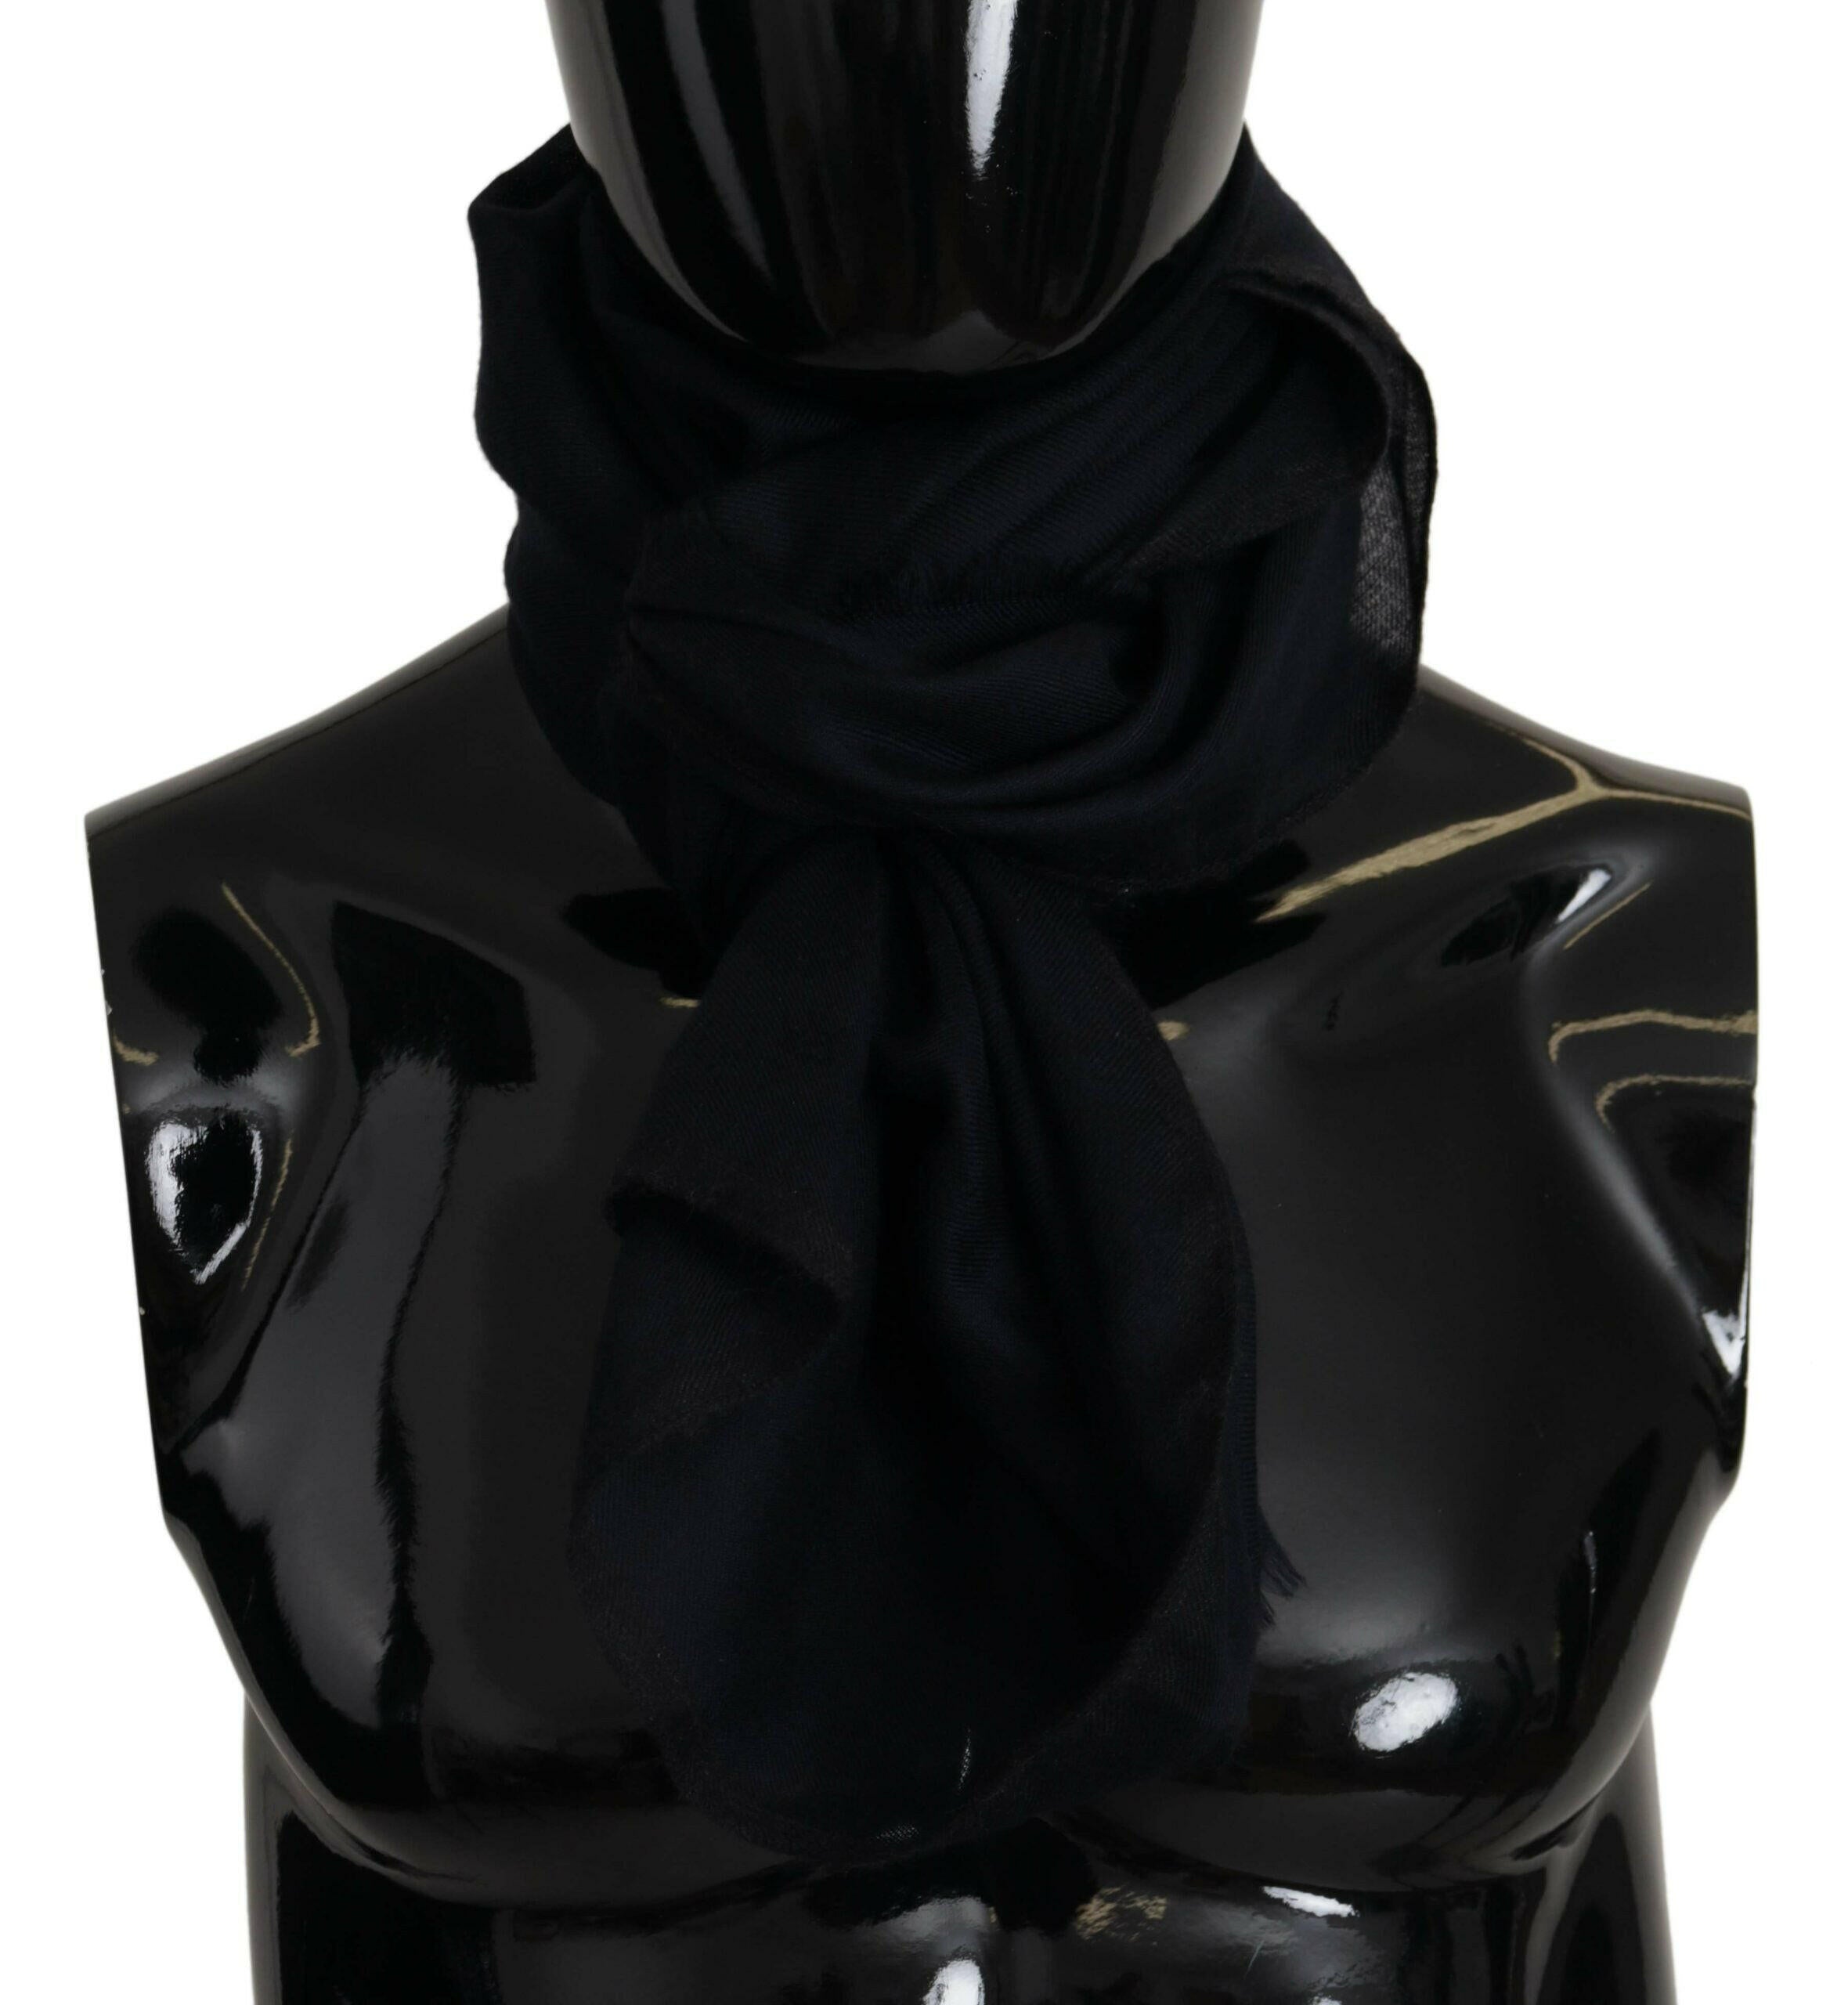 Dolce & Gabbana Black Neck Wrap Fringe Shawl Scarf - GENUINE AUTHENTIC BRAND LLC  